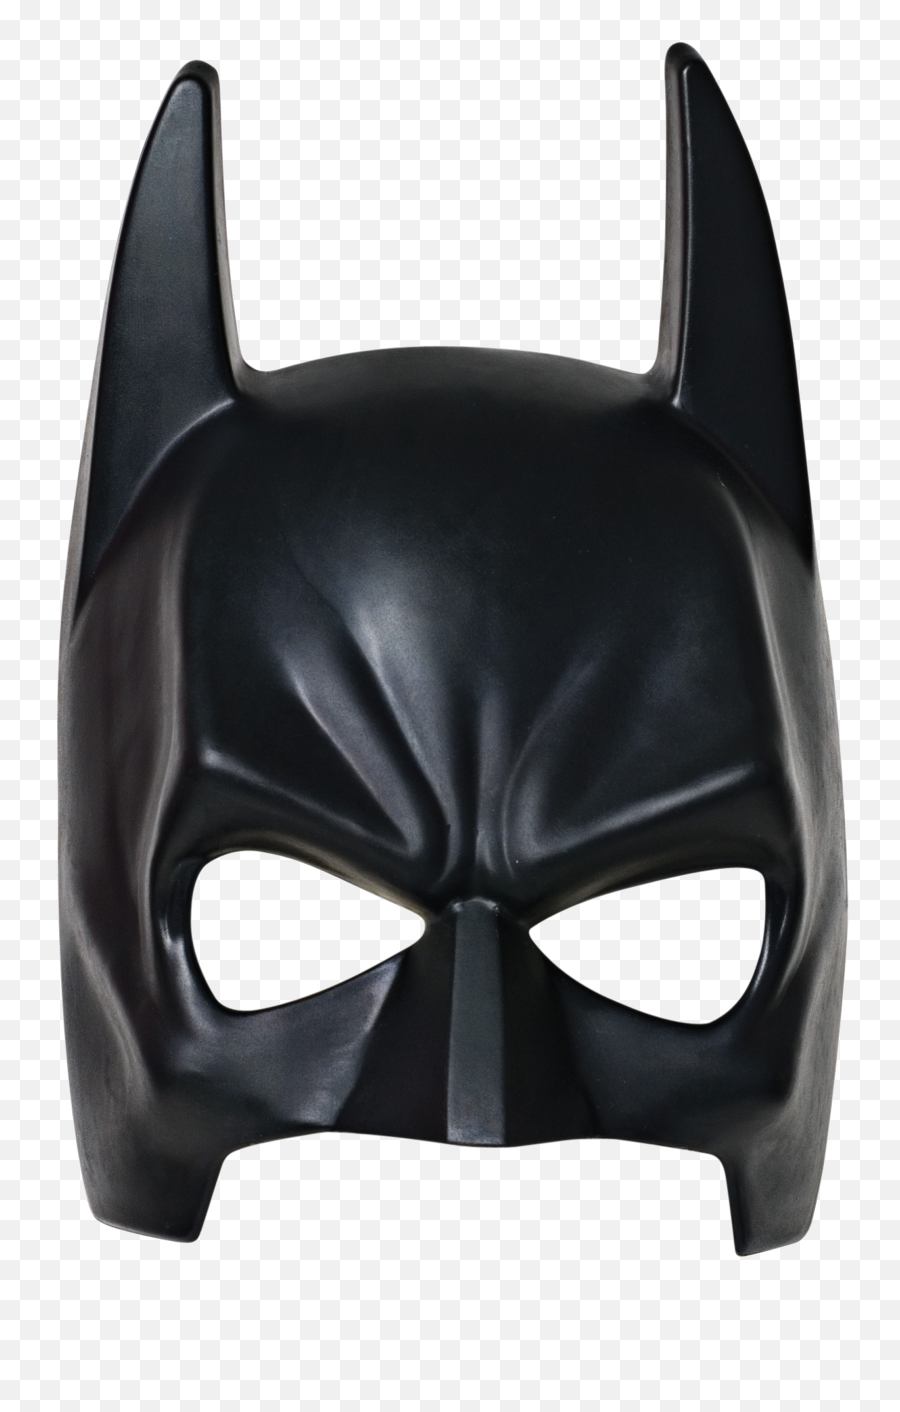 Batman Mask Png Download Image - Batman Halloween Mask Emoji,Batman Mask Png